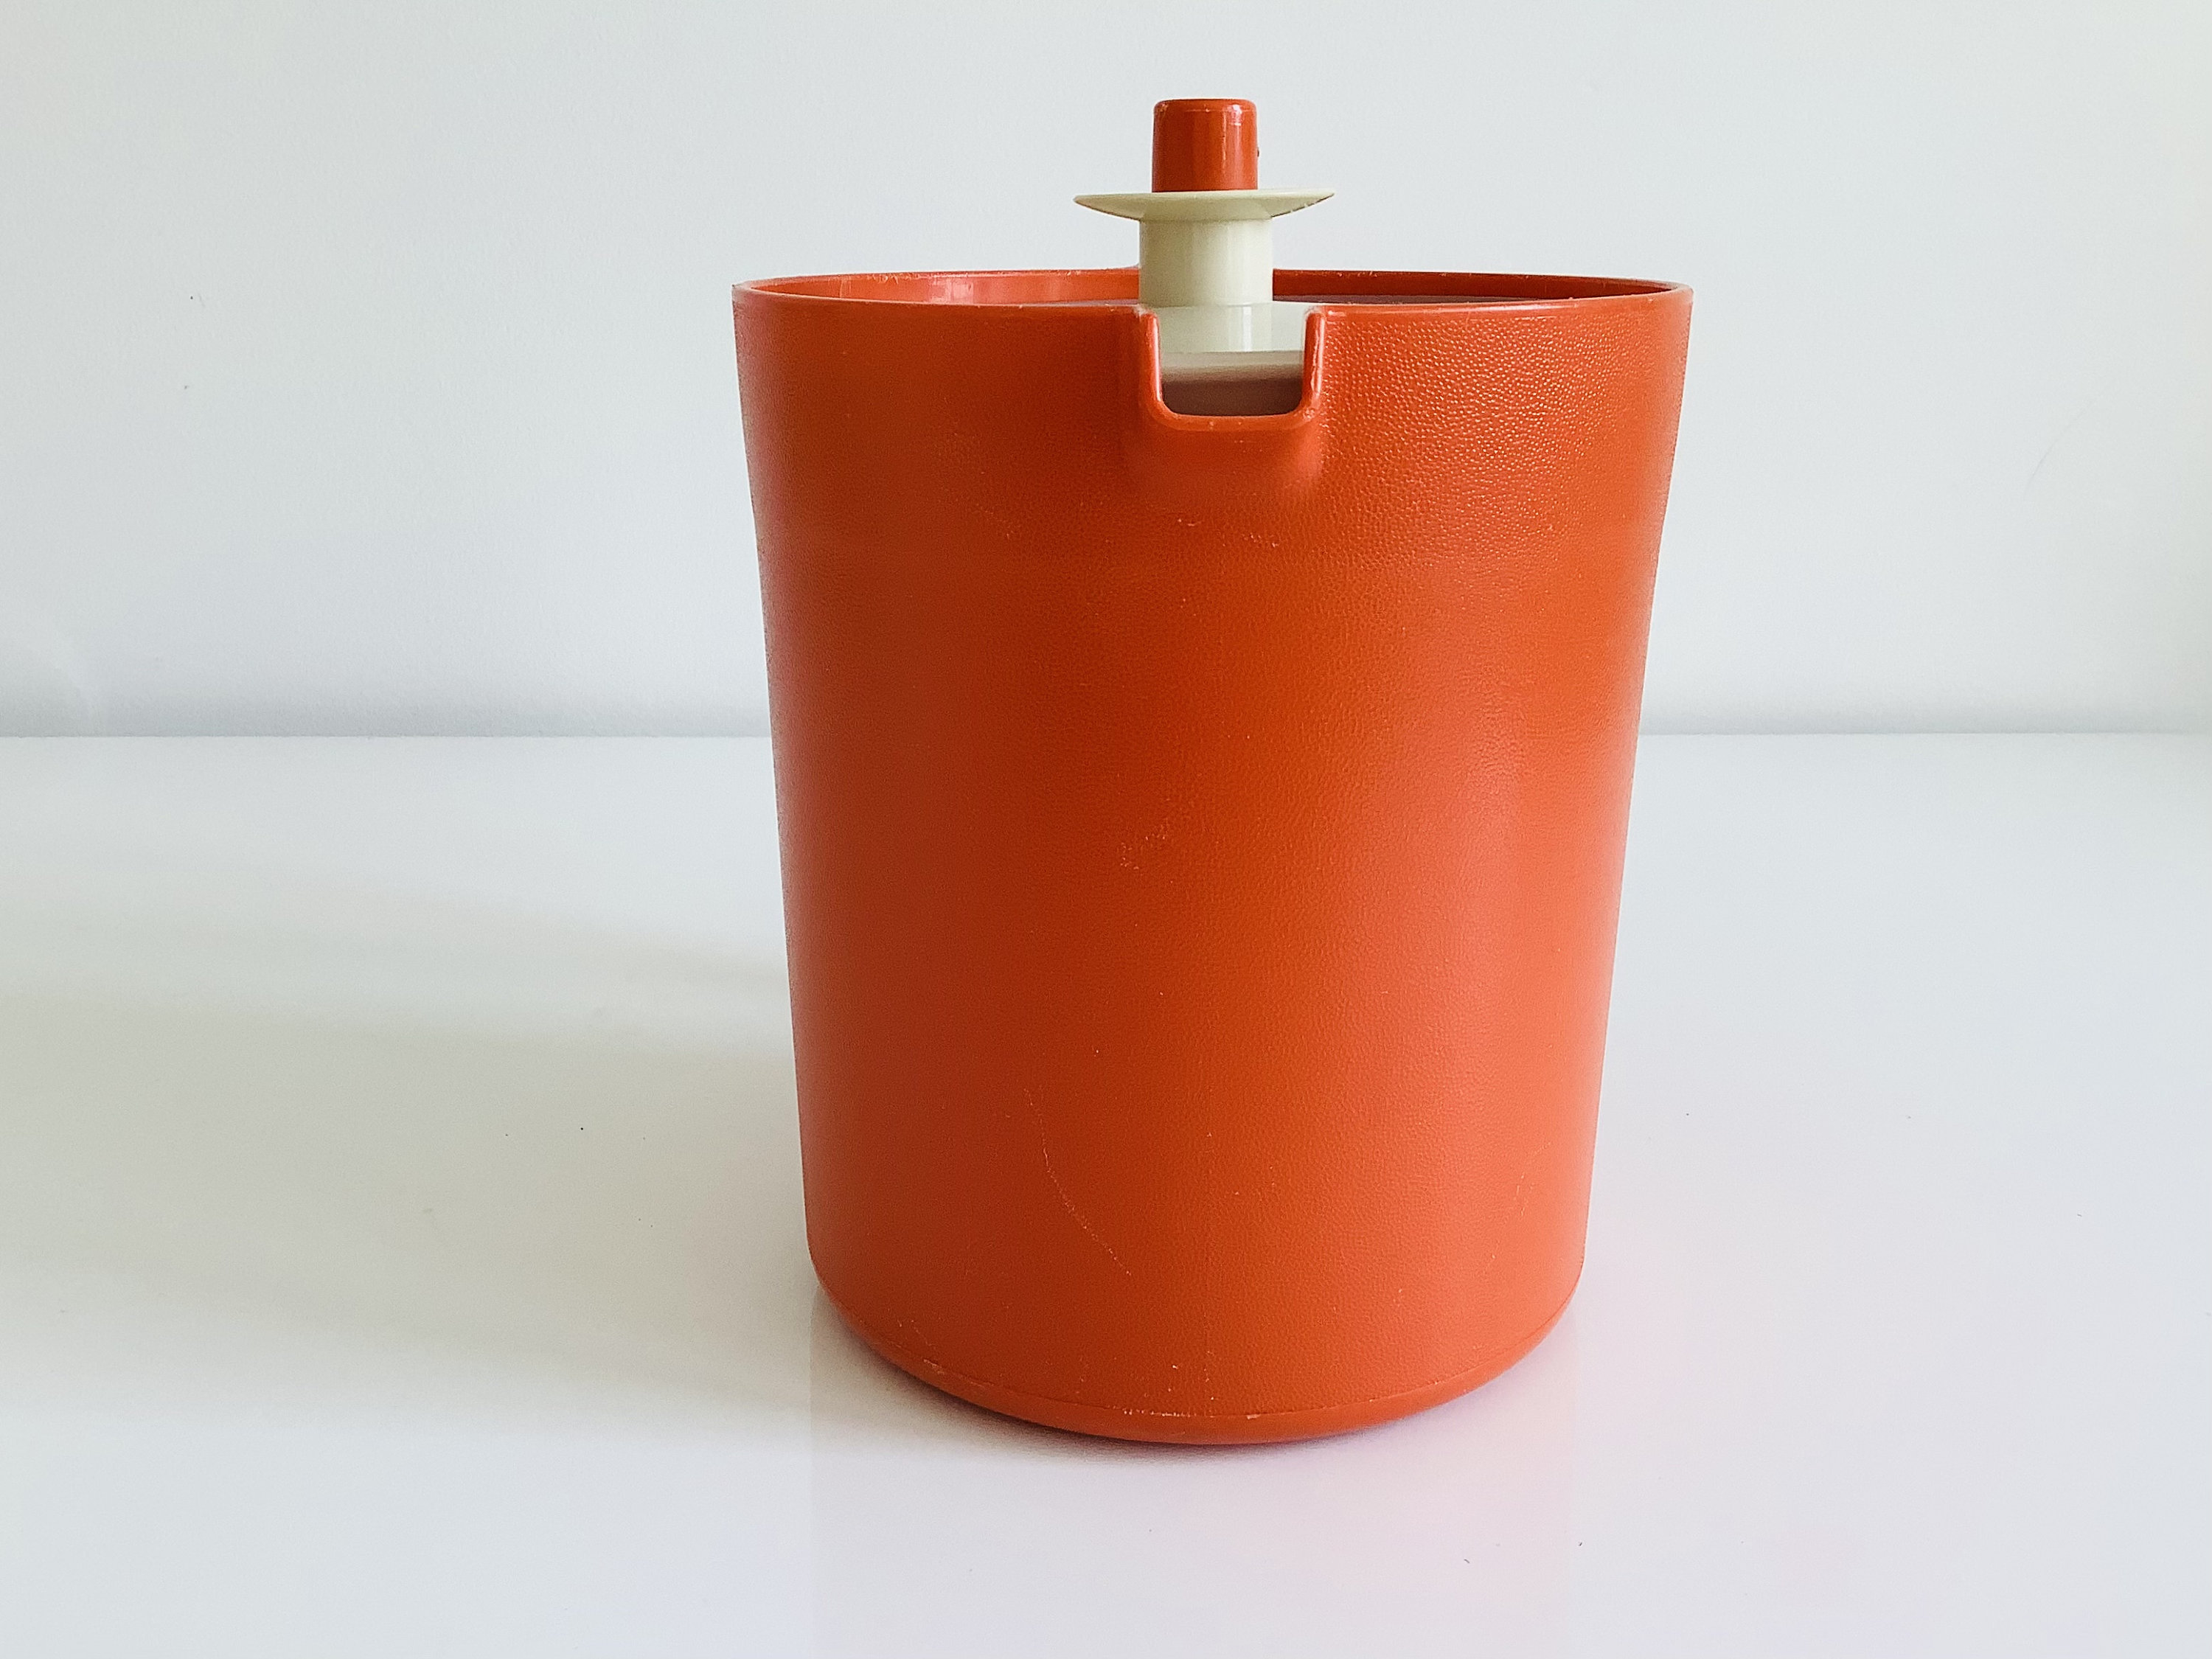 Pichet carafe Tupperware isotherme orange vintage années 70